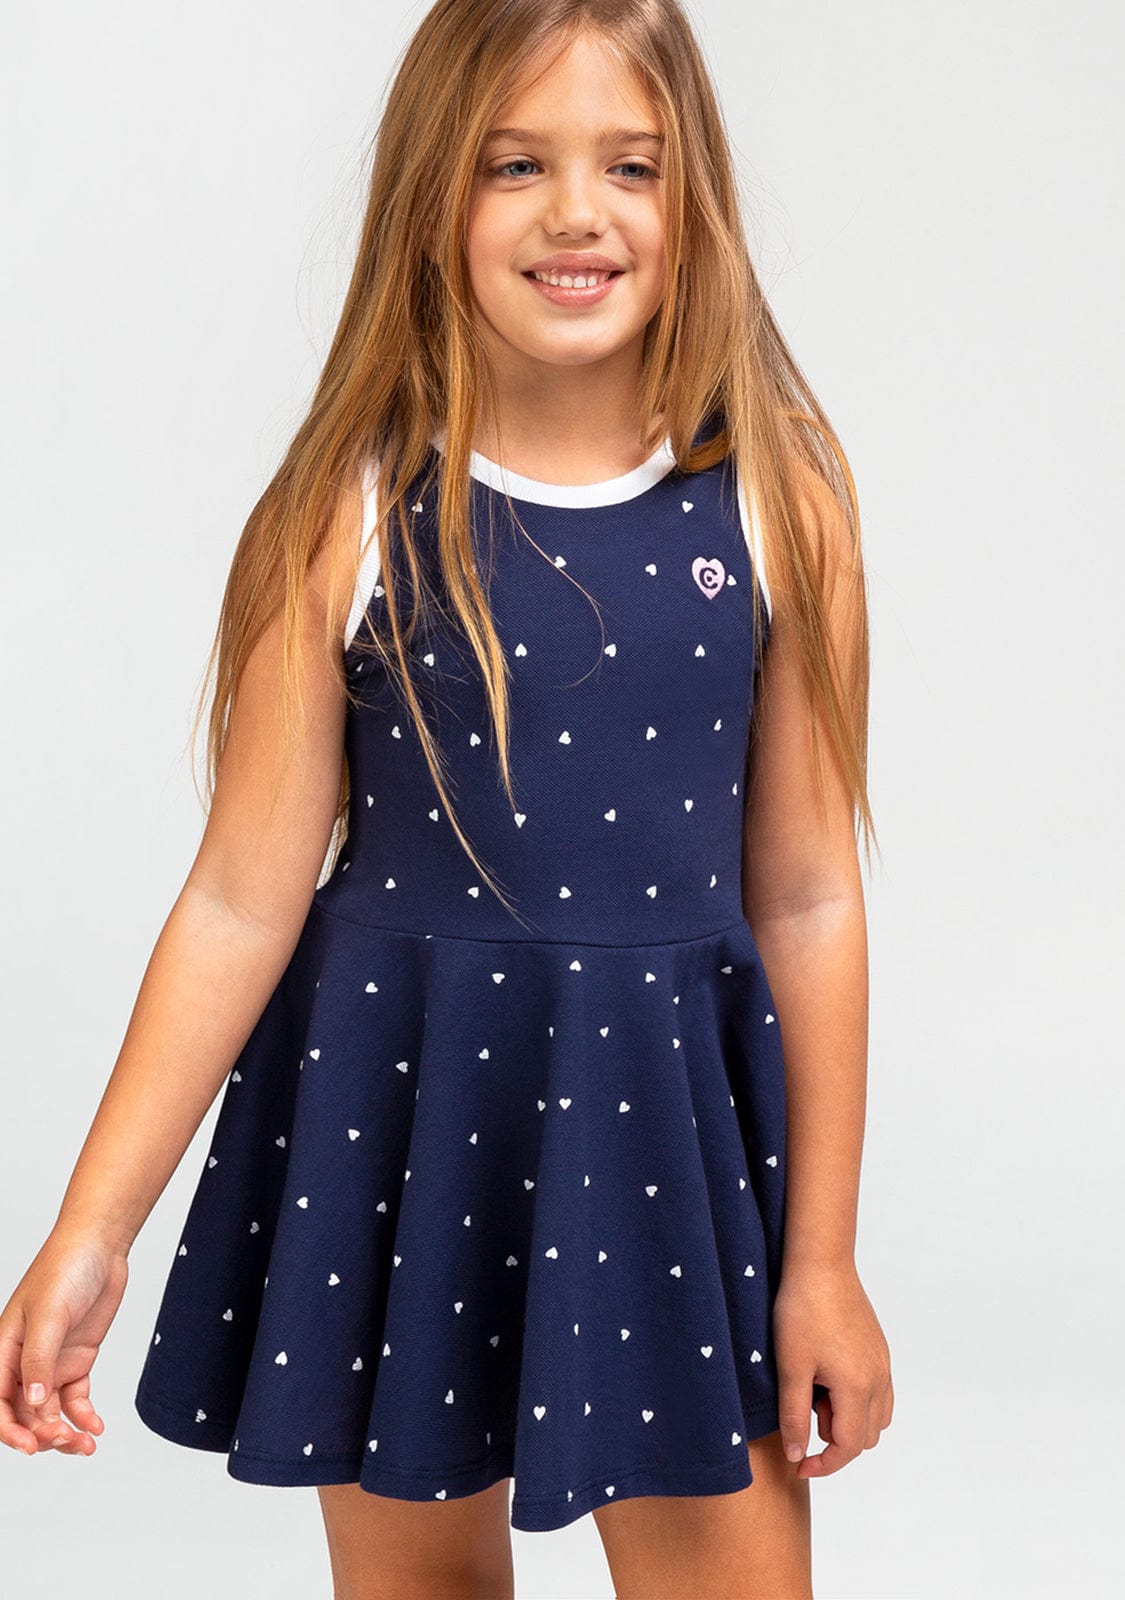 CONGUITOS TEXTIL Clothing Girl's Navy Hearts Skater Dress